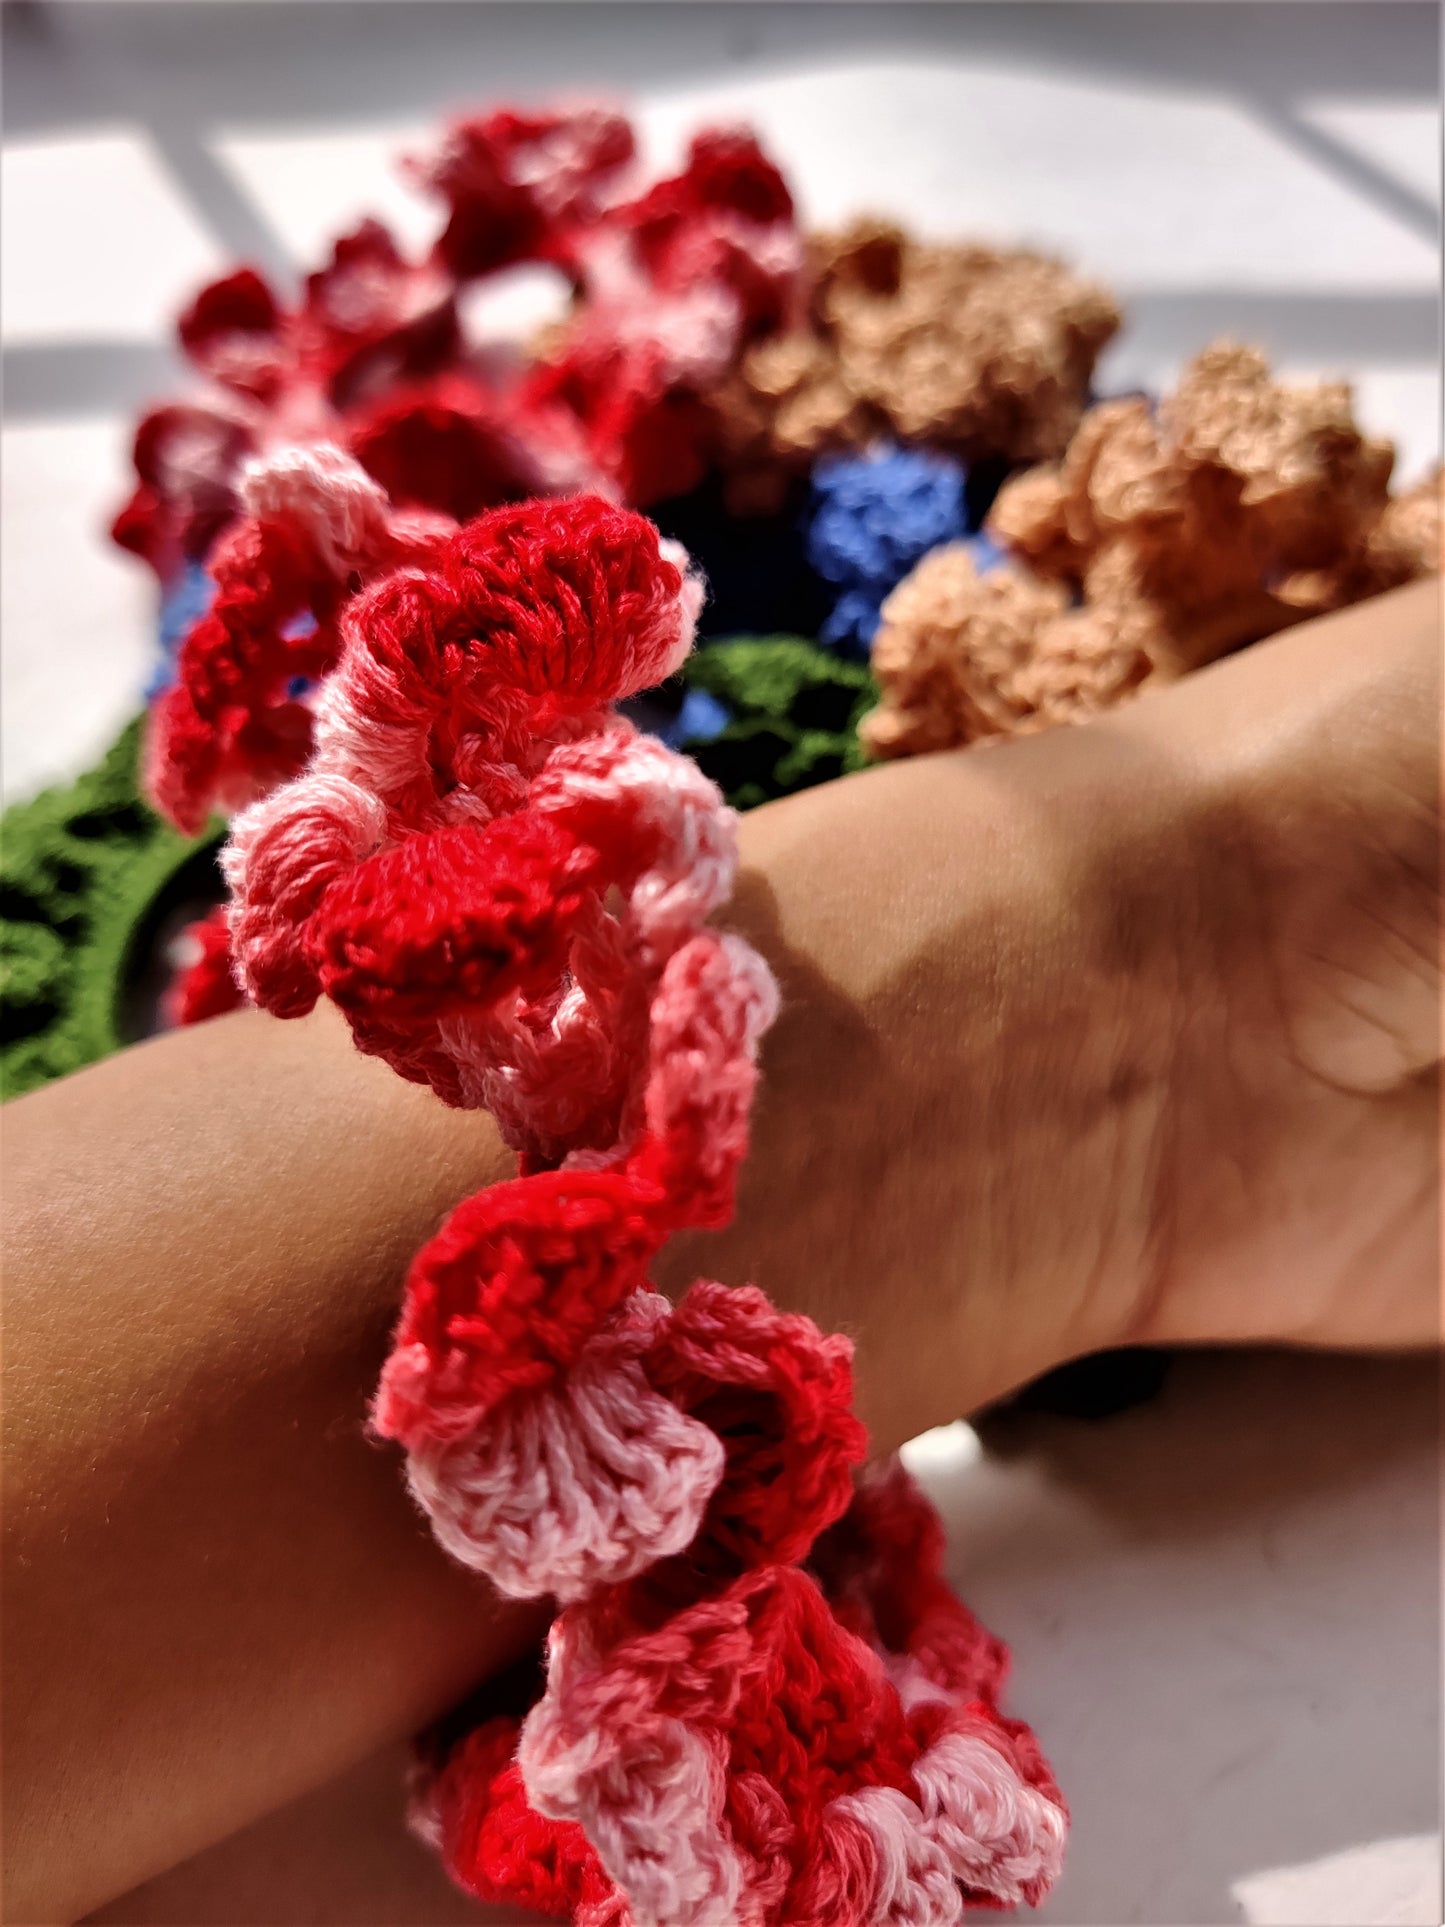 Crimson red tinted  crochet scrunchie